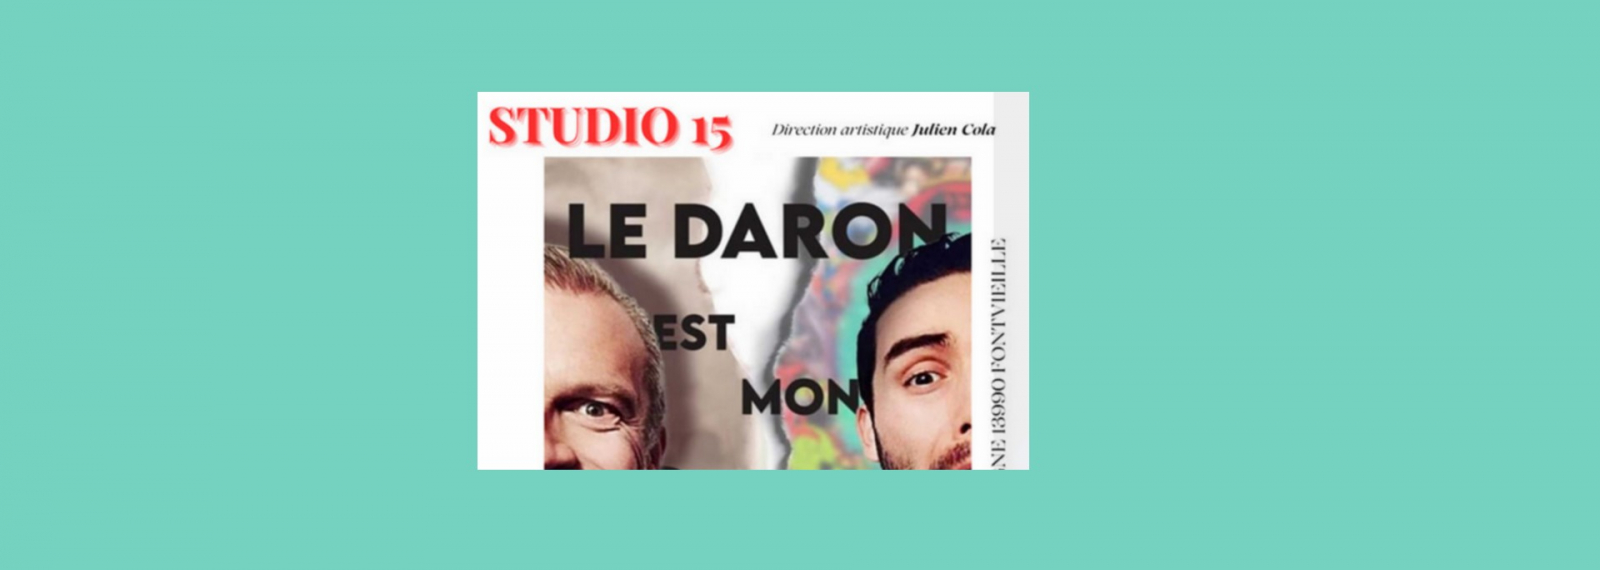 Theatre evening - Studio 15 - 'Le daron est mon coloc' by John-John